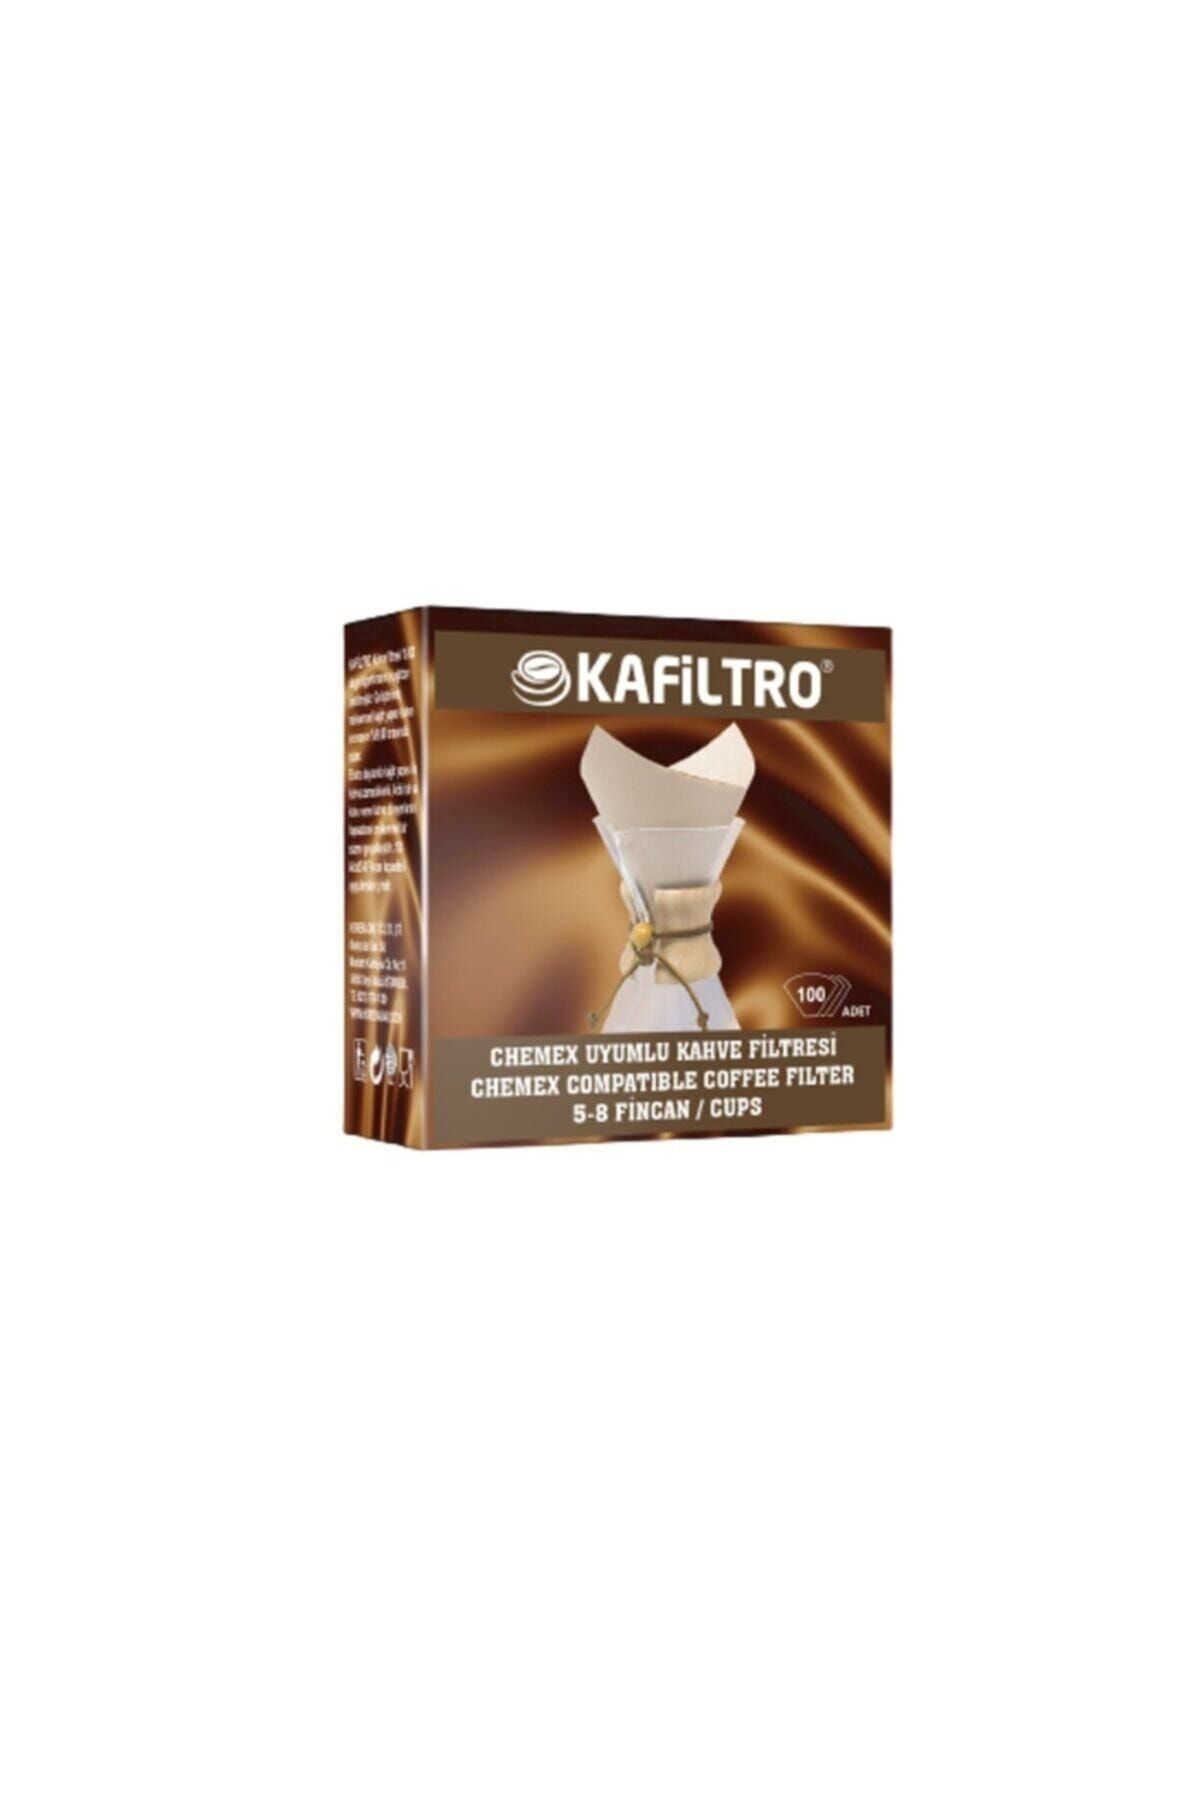 Caffeo Kafiltro Chemex Uyumlu Kahve Filtres 5-8 Fincan